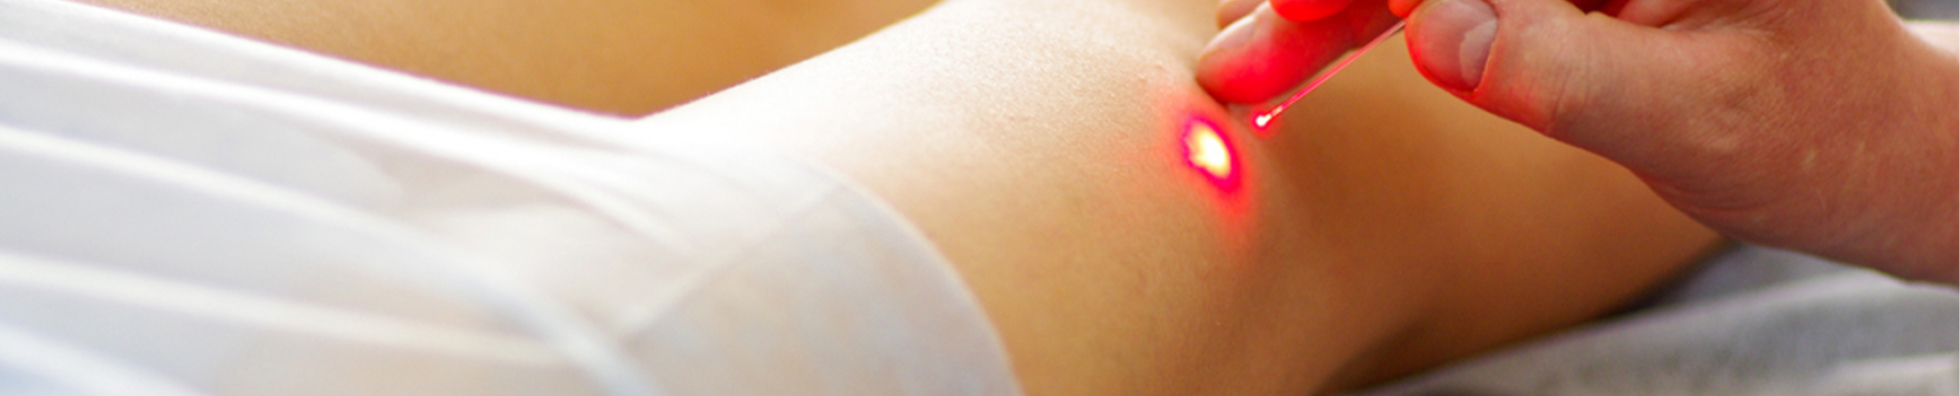 Laser Vascular Vein Removal – Small Area